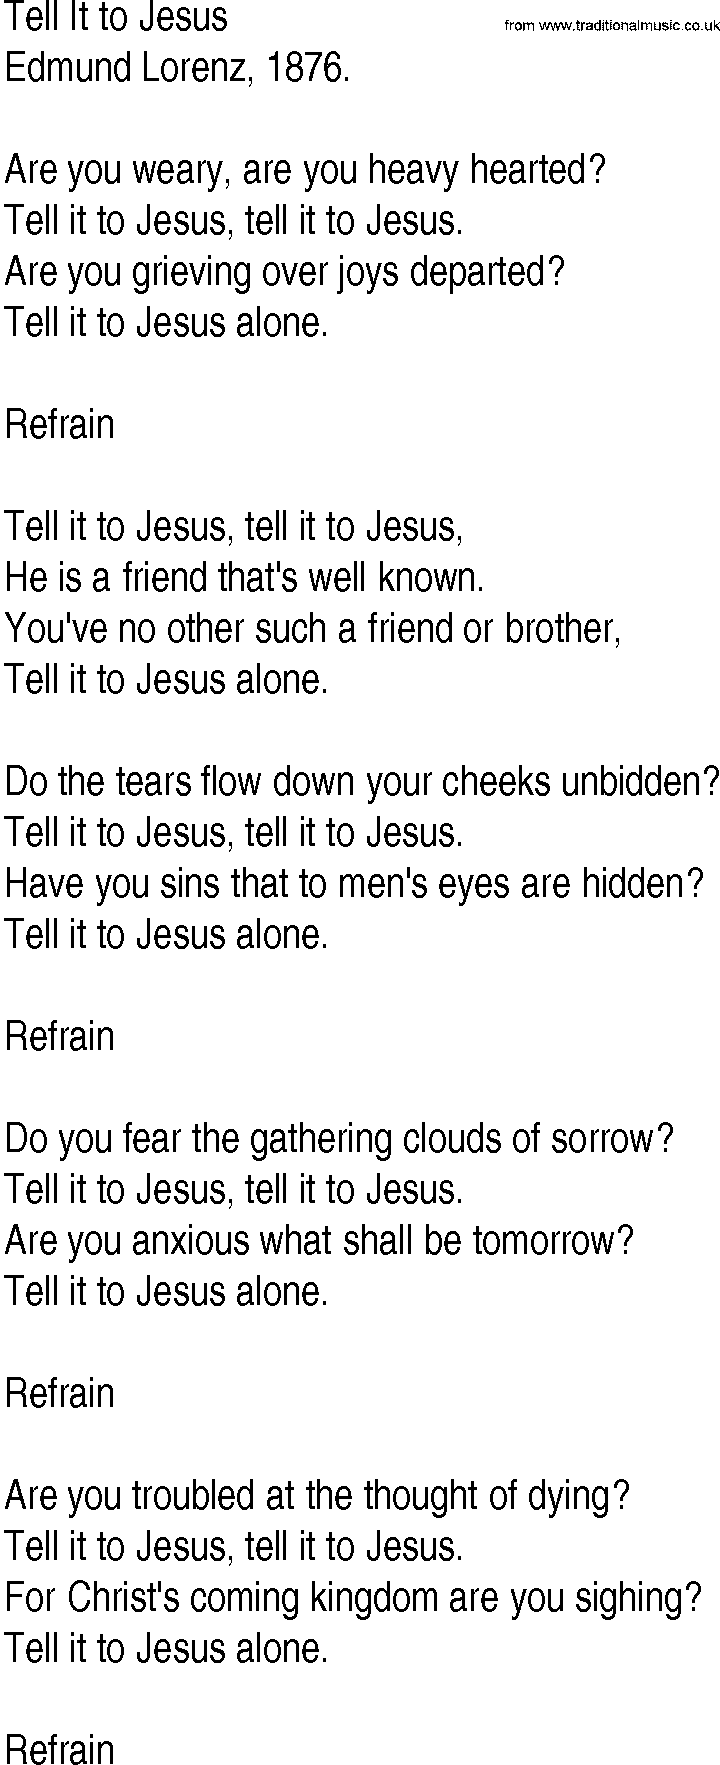 Hymn and Gospel Song: Tell It to Jesus by Edmund Lorenz lyrics